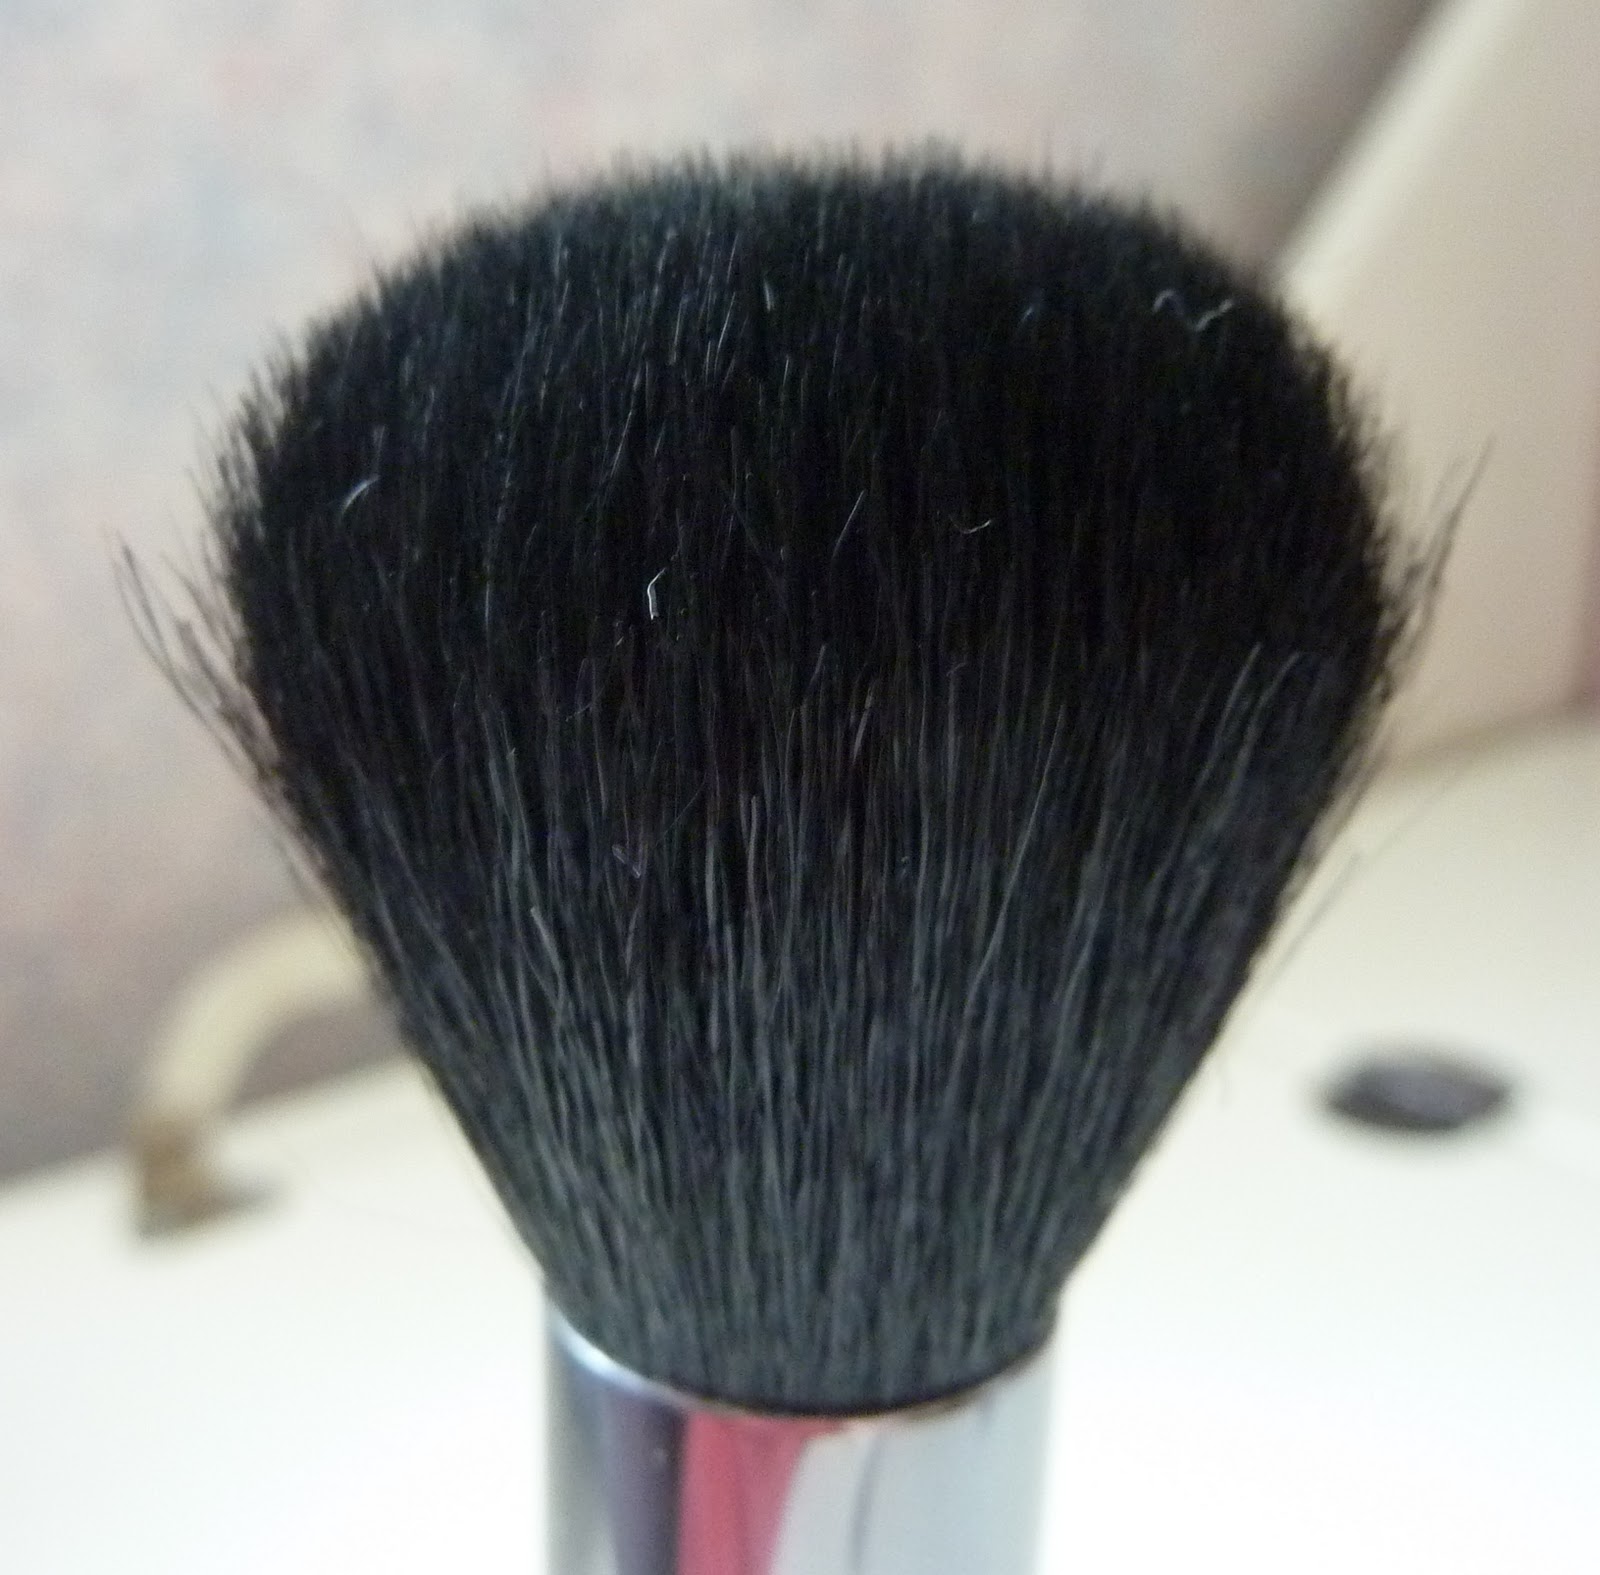 Click and Make-Up Beauty Blog: Marks & Spencer's Make Up Brushes